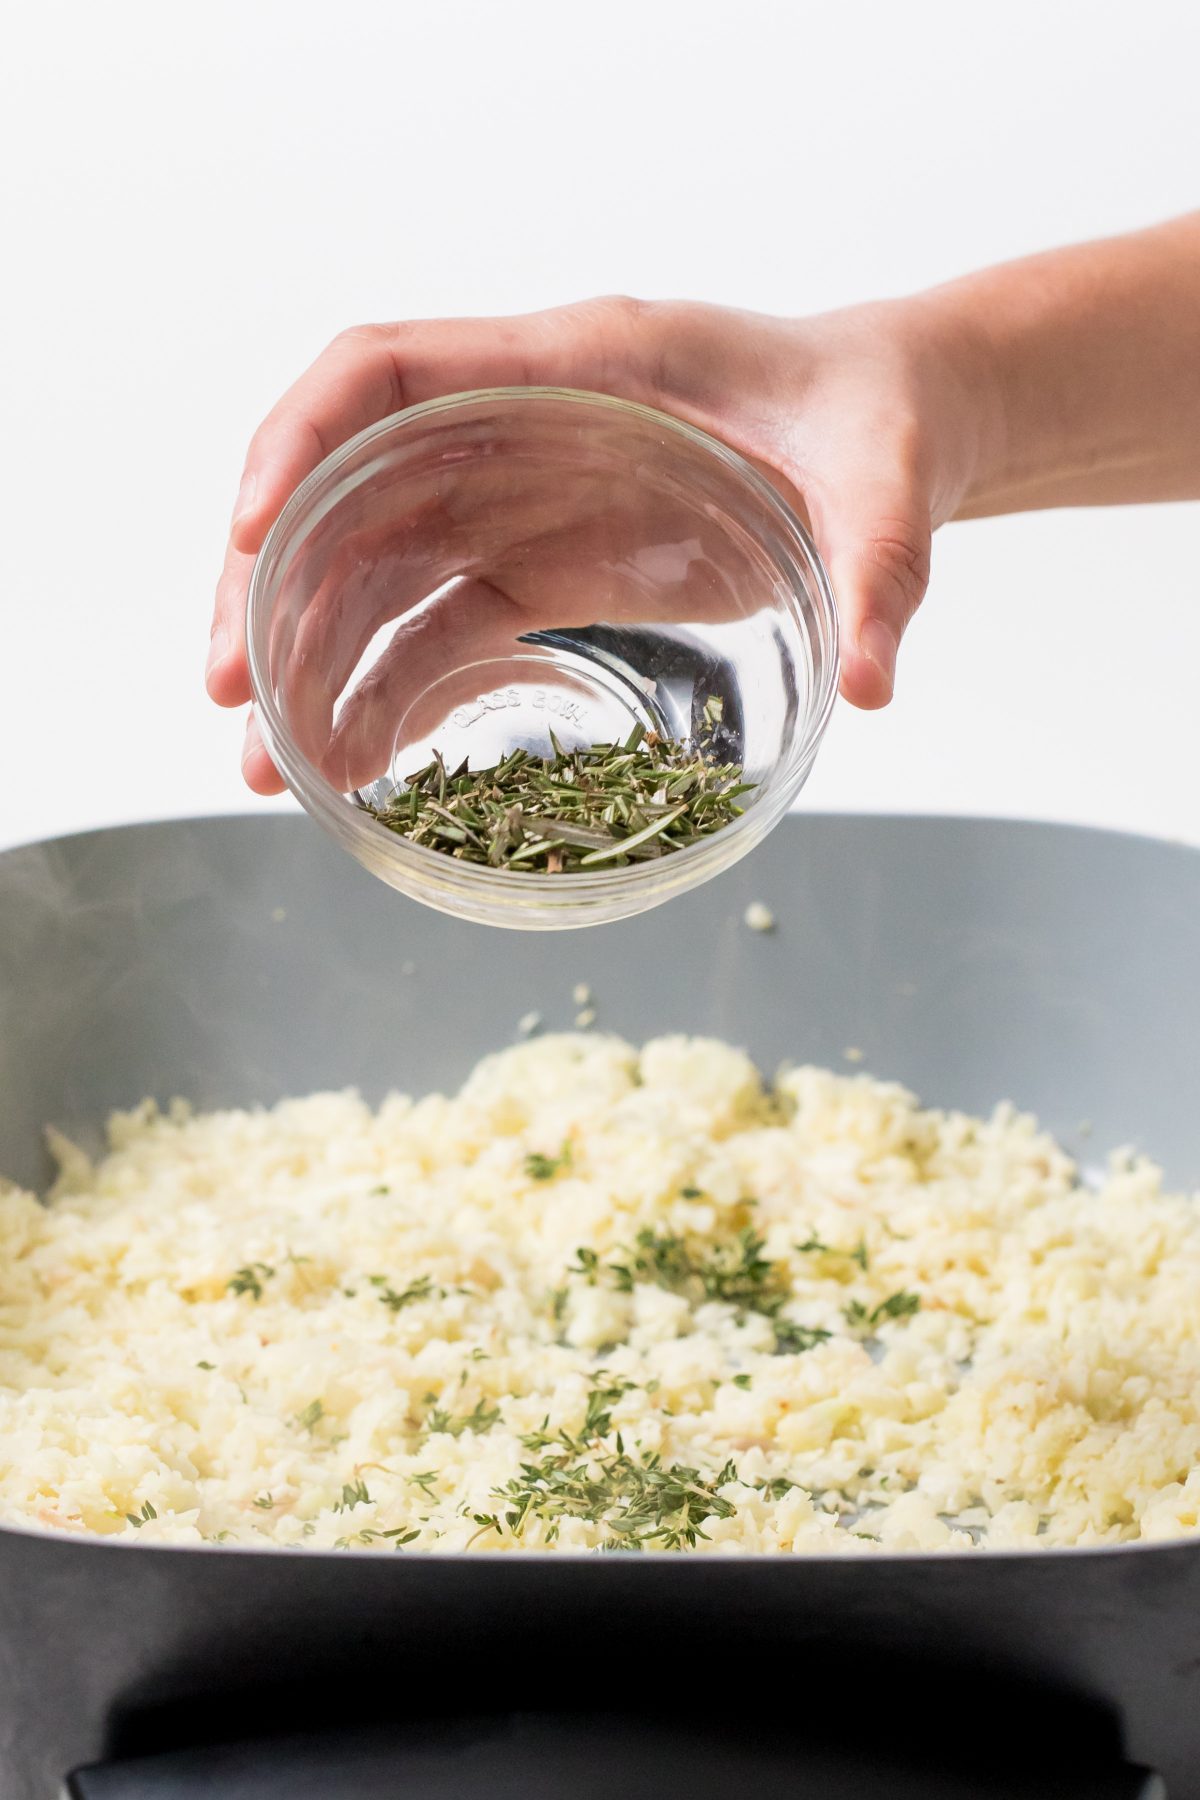 5D4B4143 - Winter Cauliflower Rice Bowls - Cook the riced cauliflower